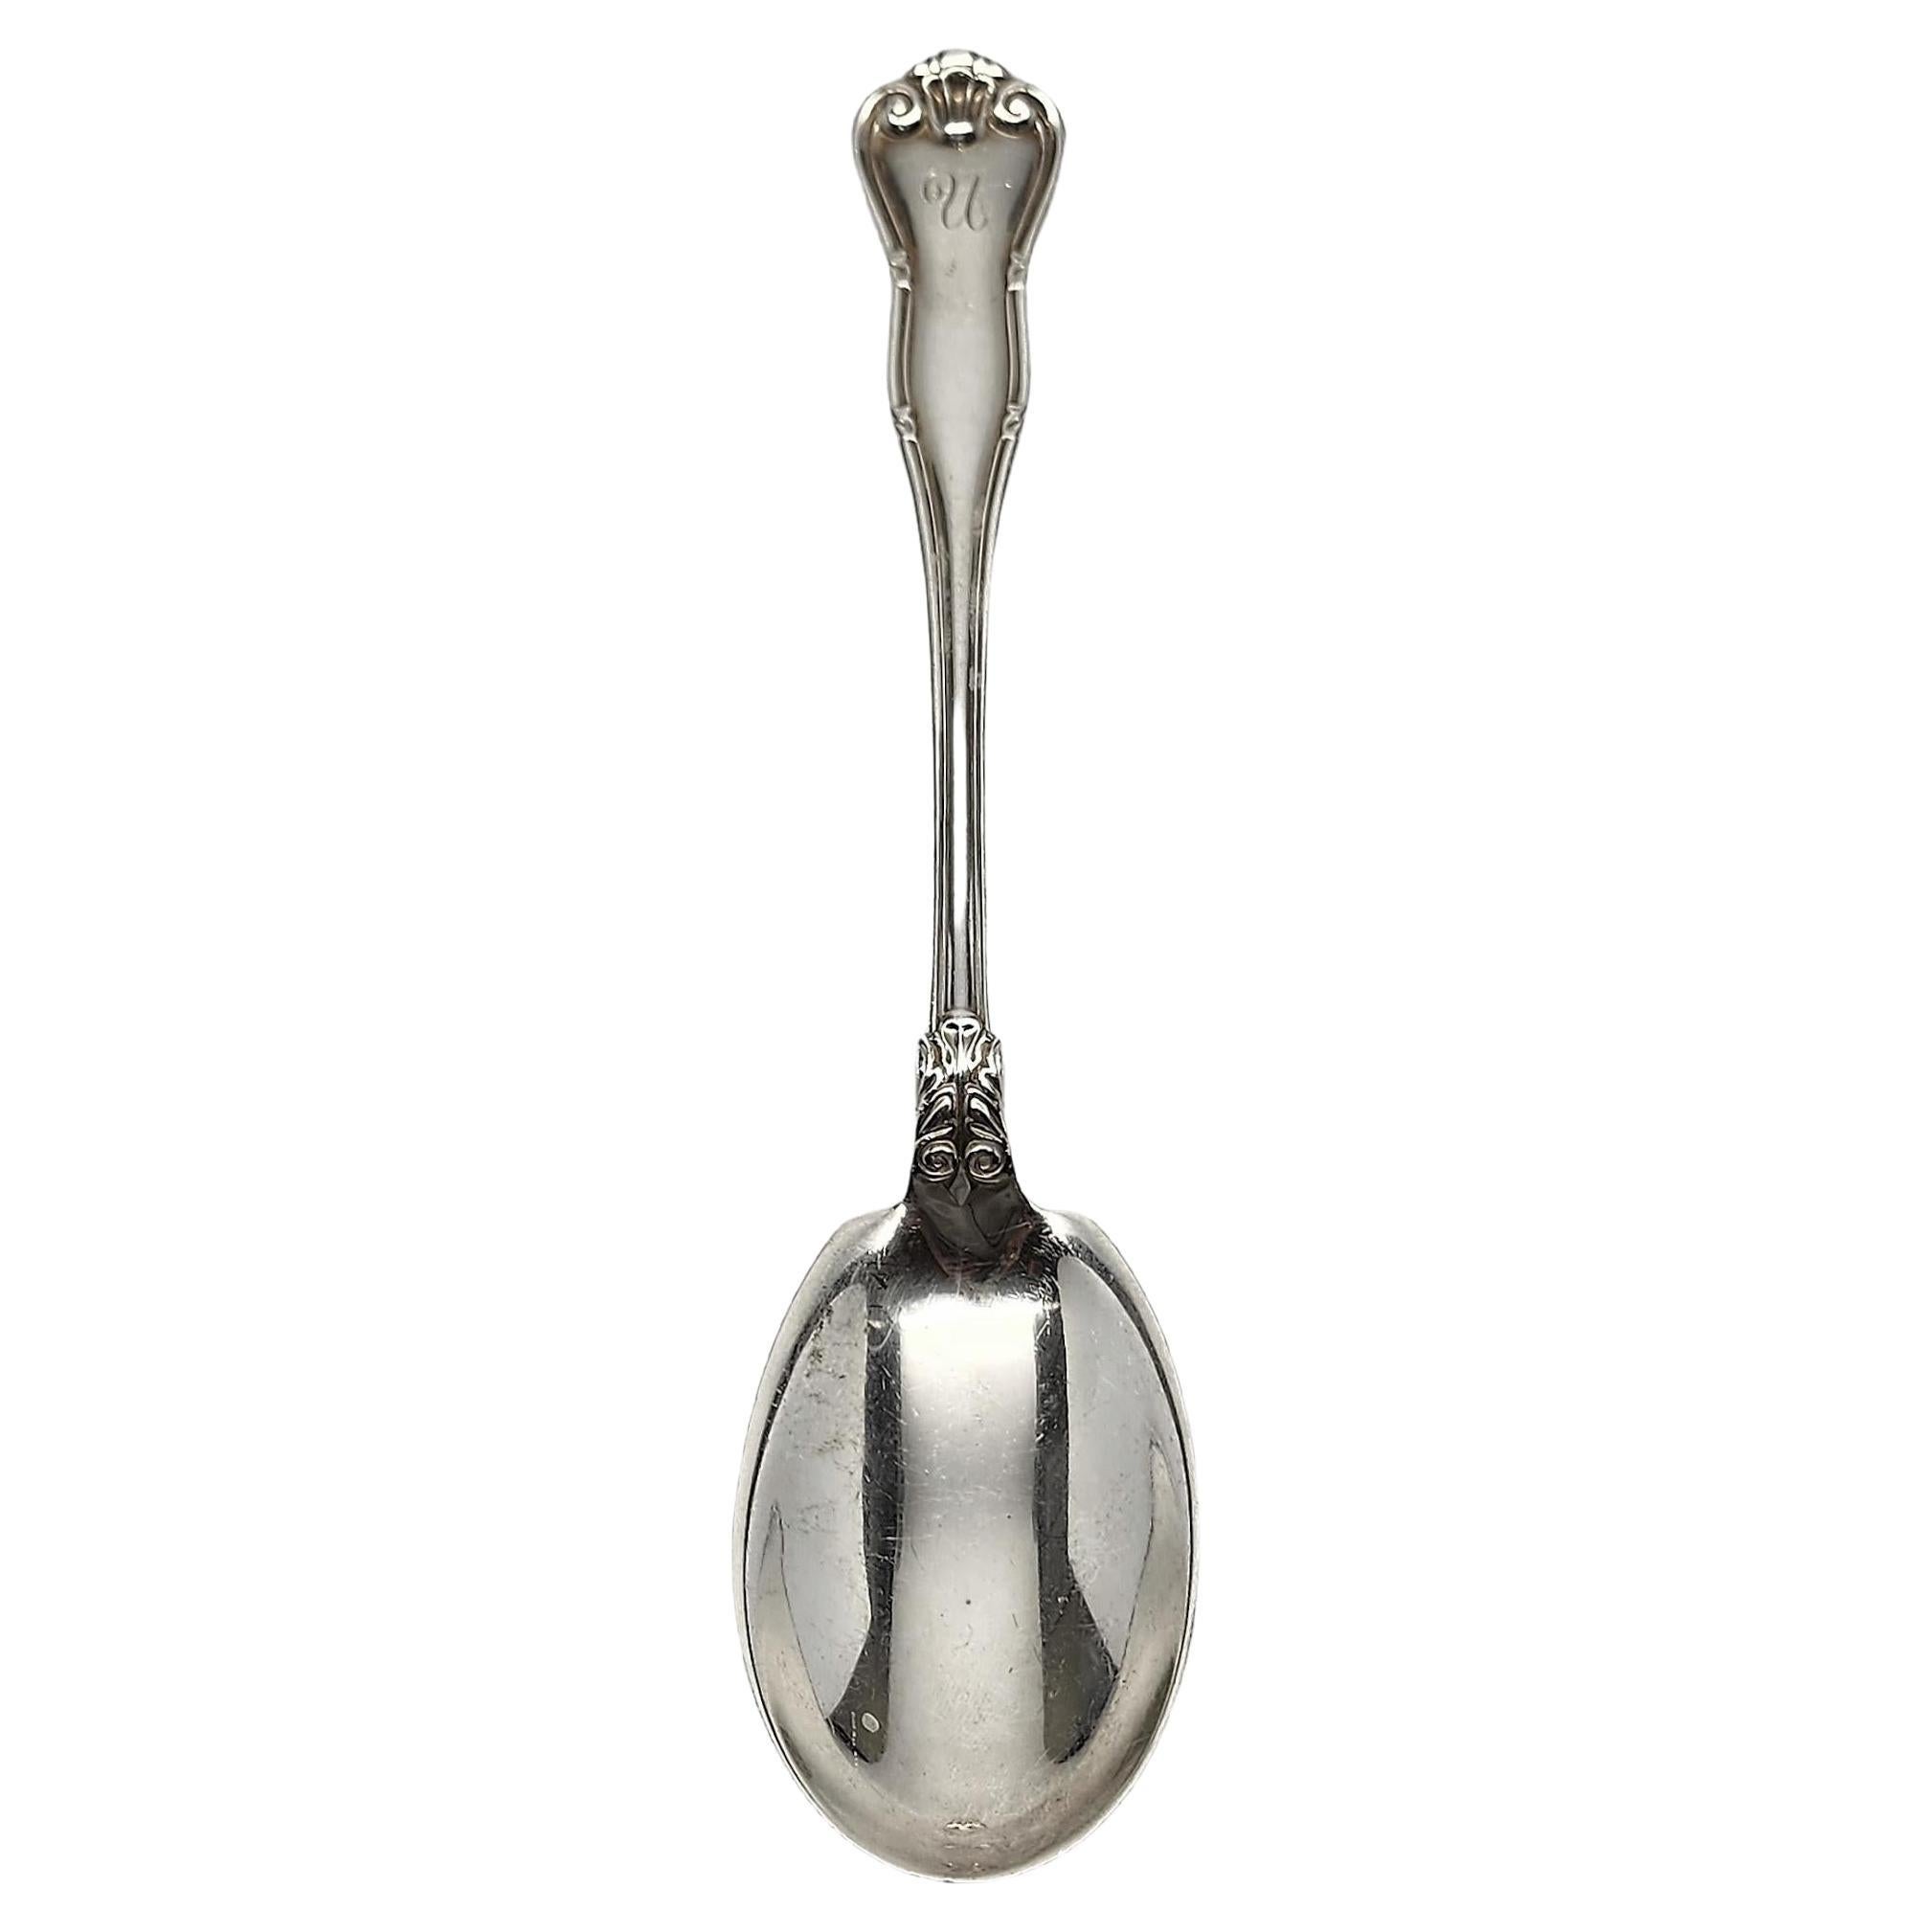 Tiffany & Co Provence Sterling Silver Preserve Spoon 7 3/8" w/mono #15391 For Sale